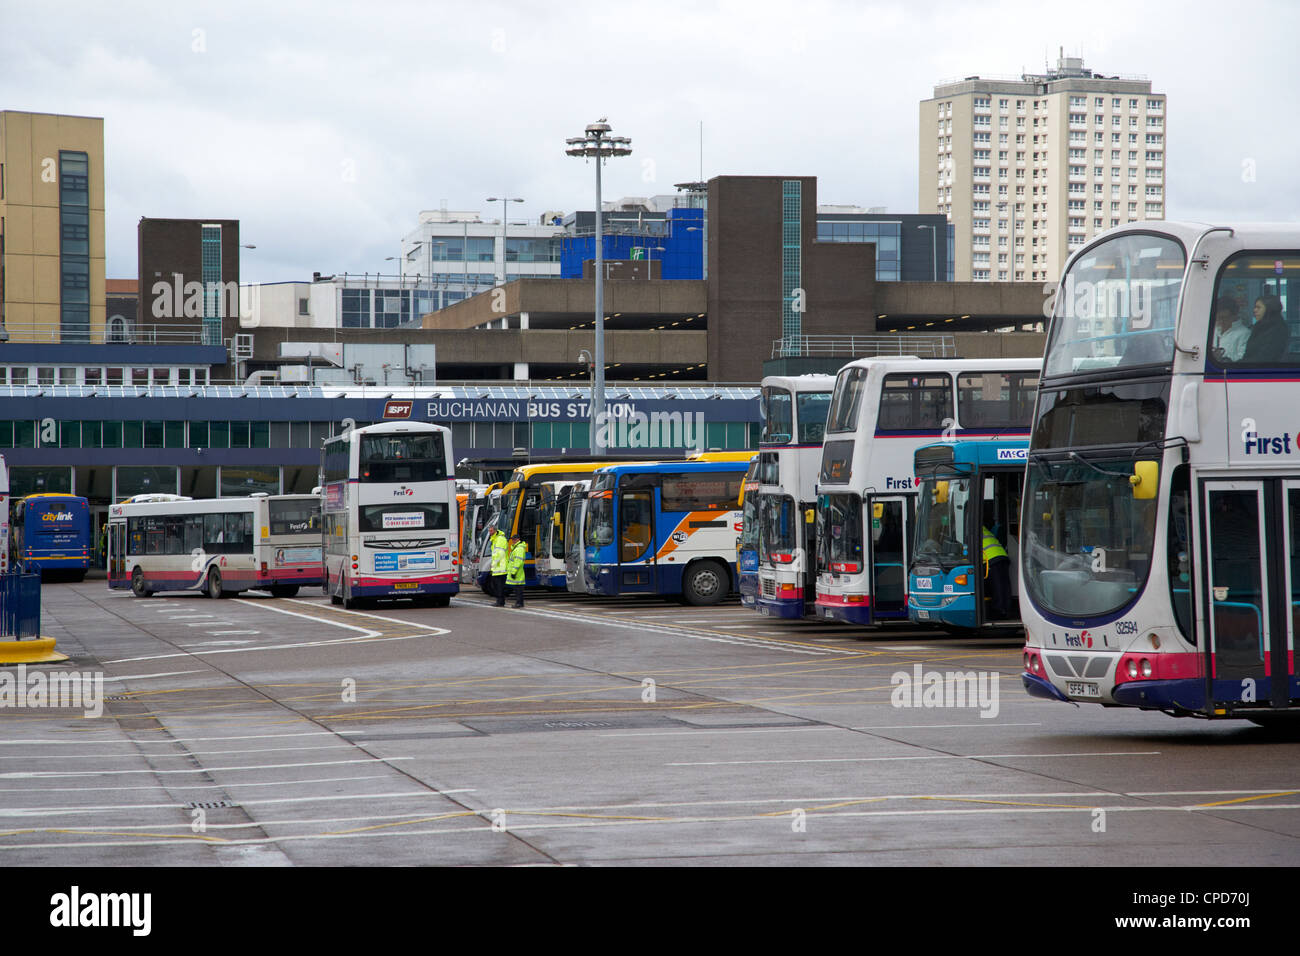 rows of busses at Glasgow Buchanan street bus station Scotland UK Stock ...